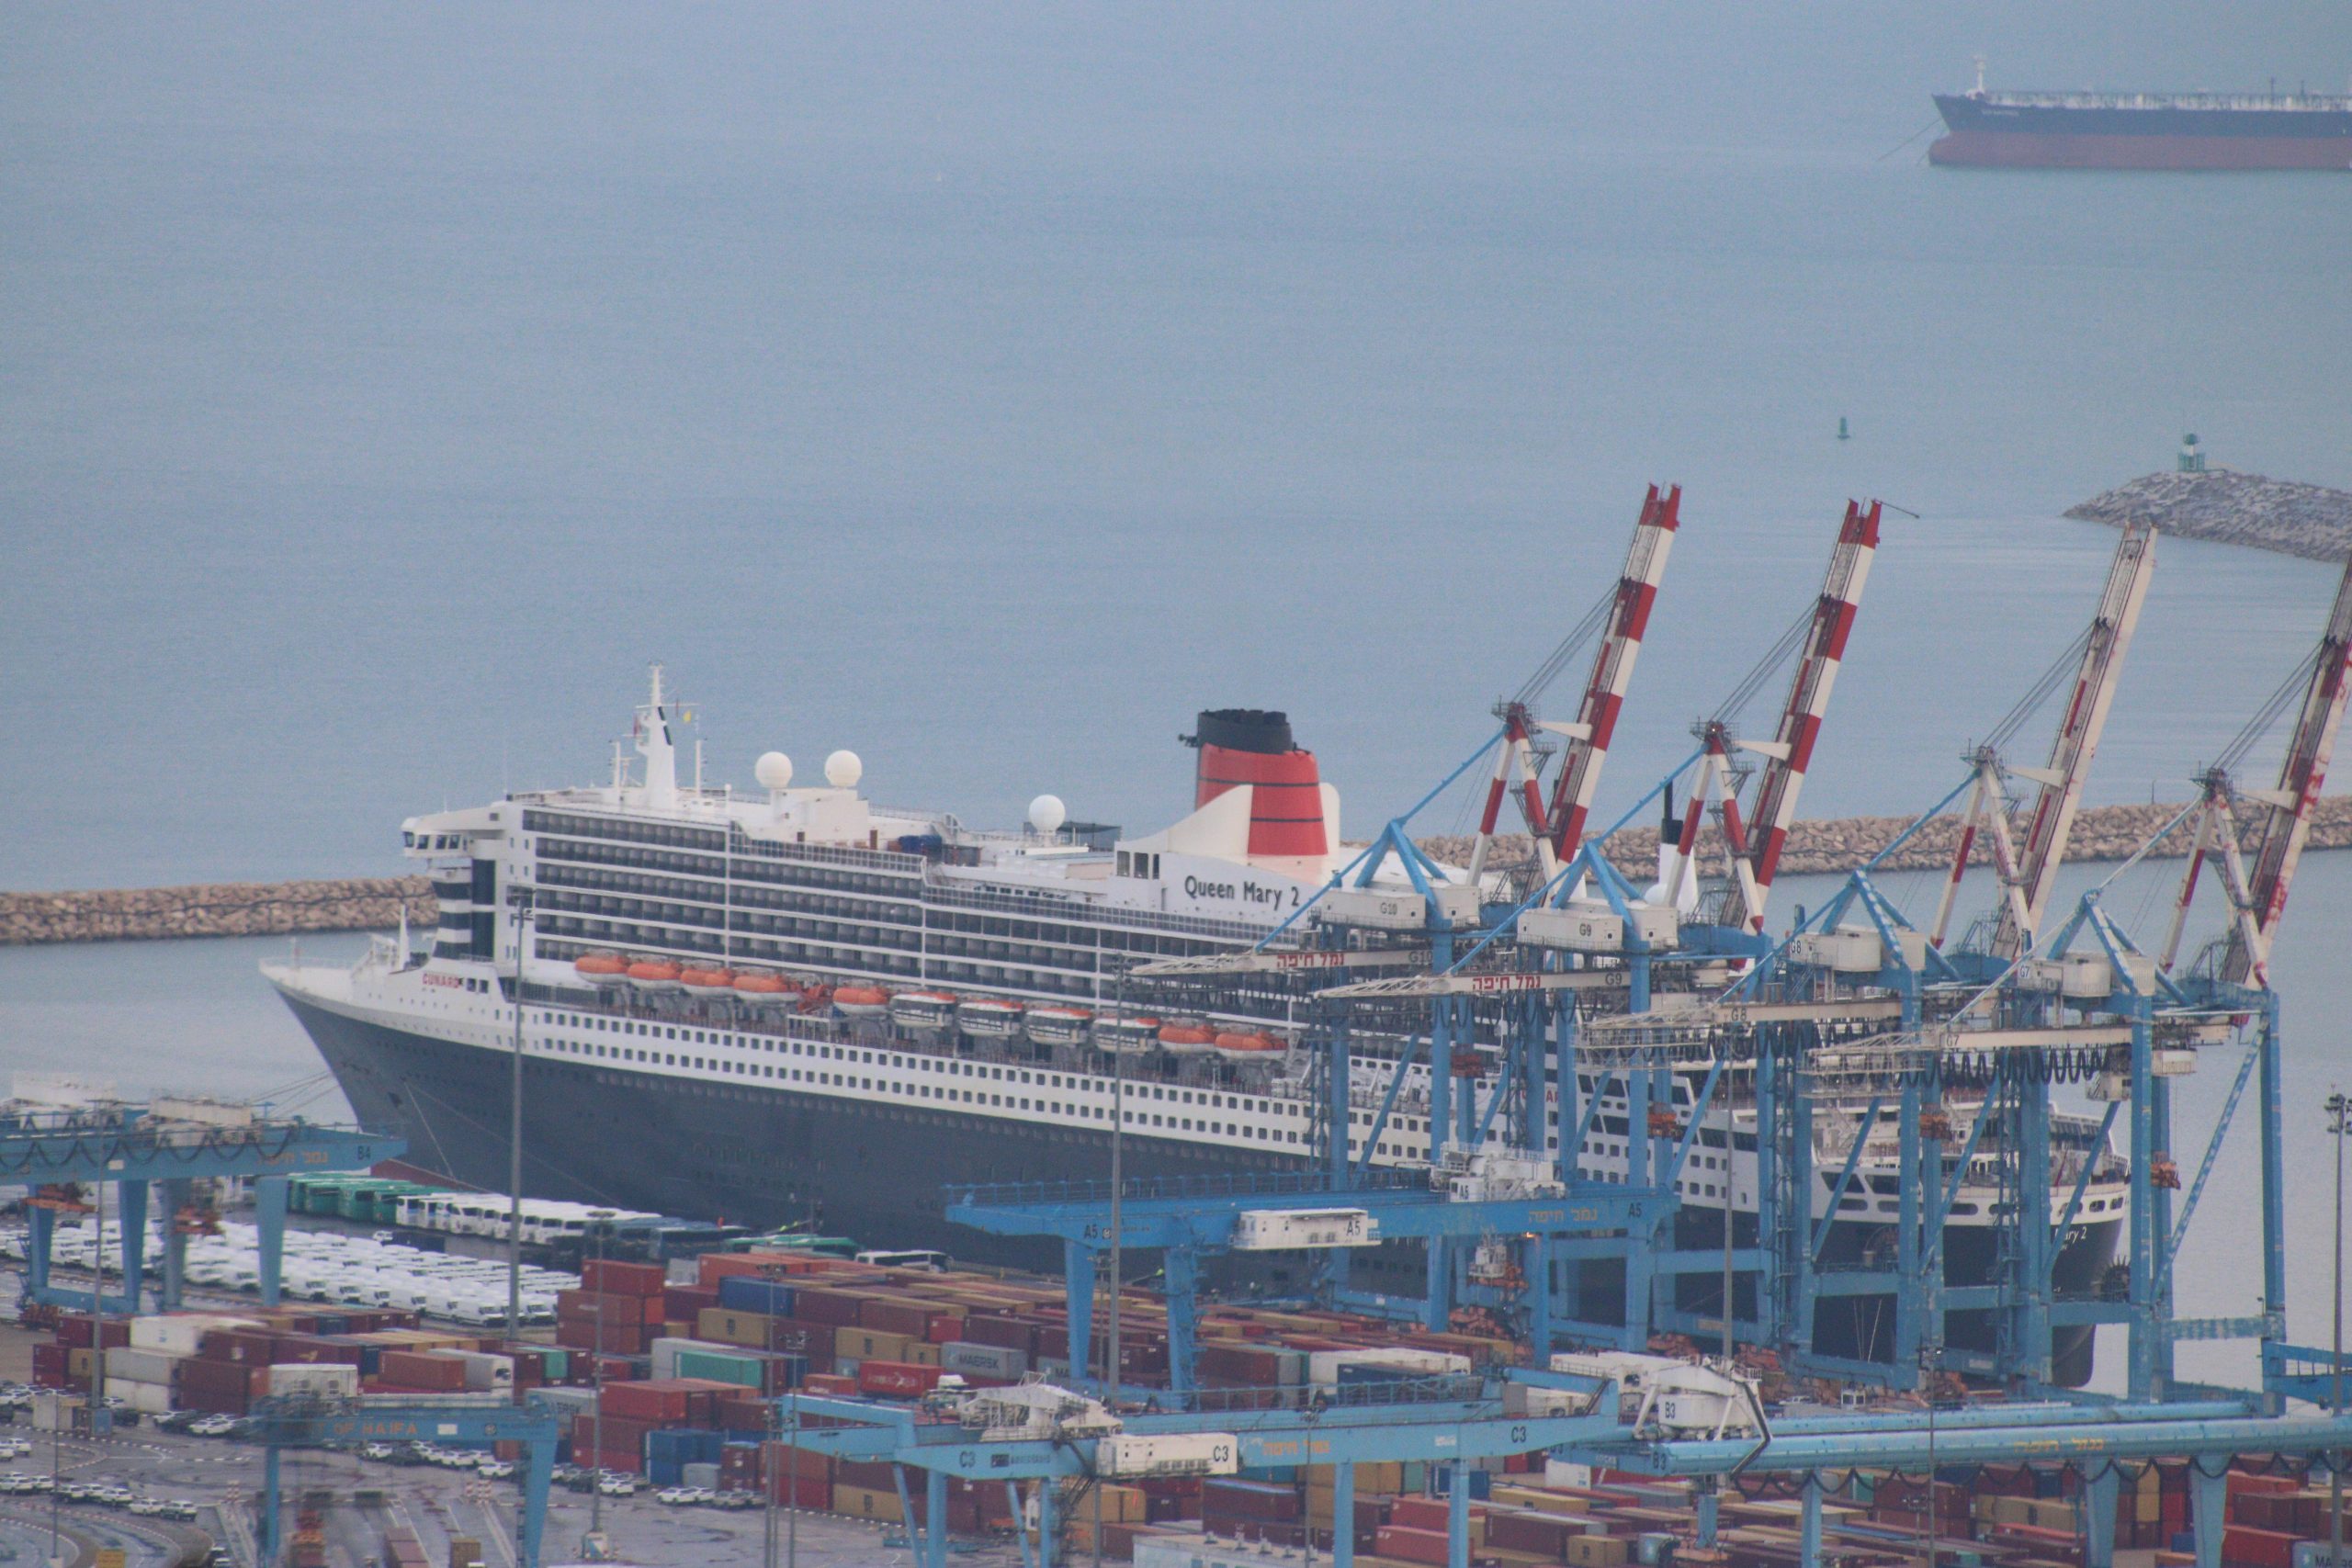 Queen Mary 2, the luxury cruise ship, arrives to Haifa